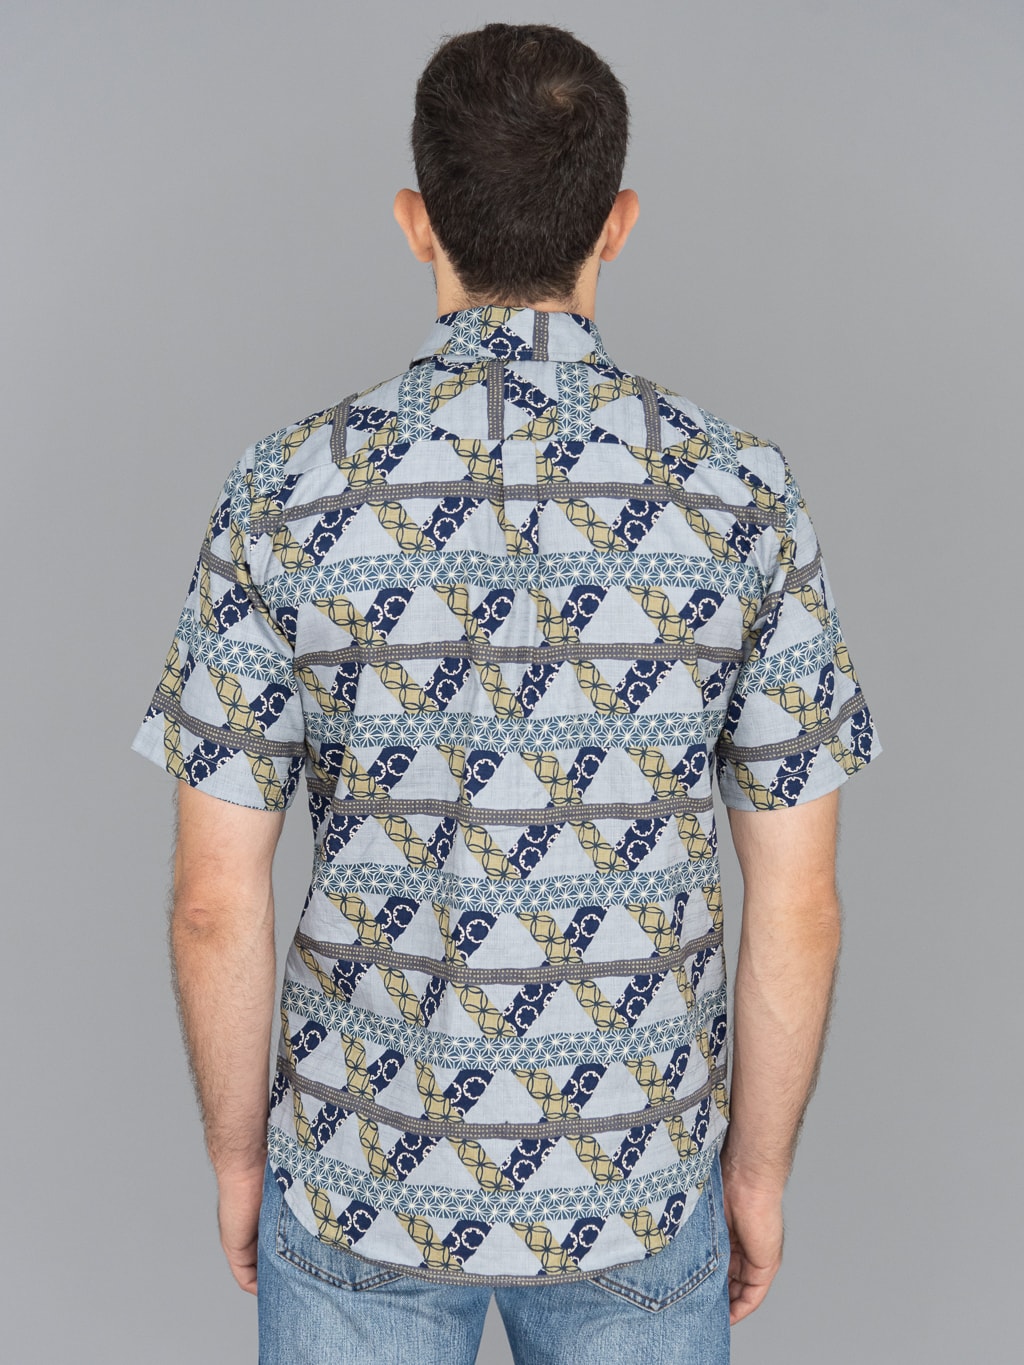 rogue territory maker shirt grey lattice slim fit back